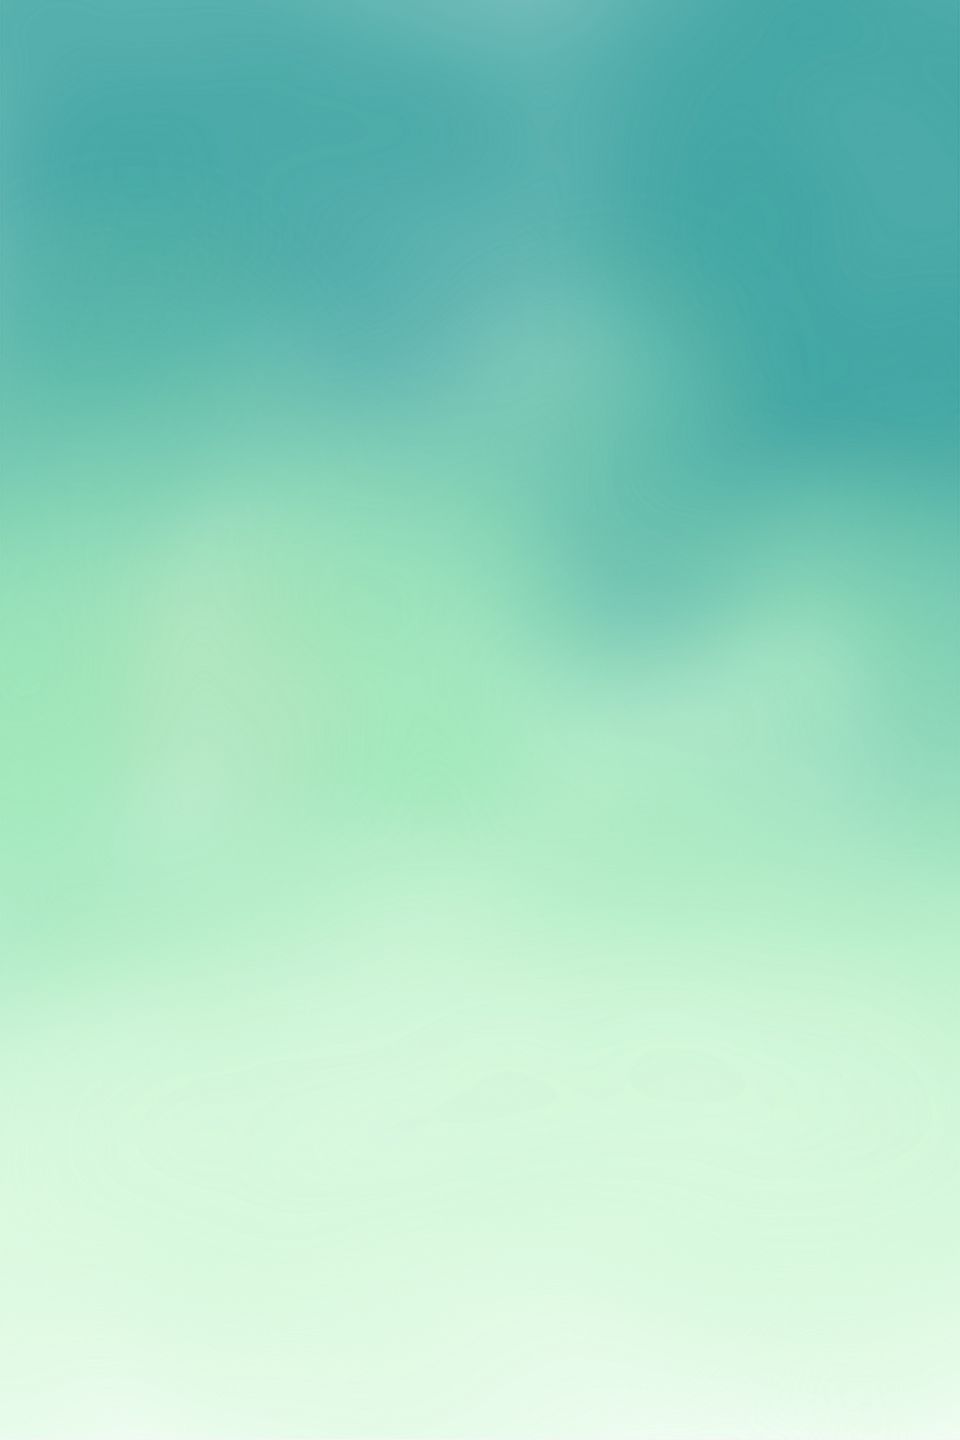 Green Gradient Background Download